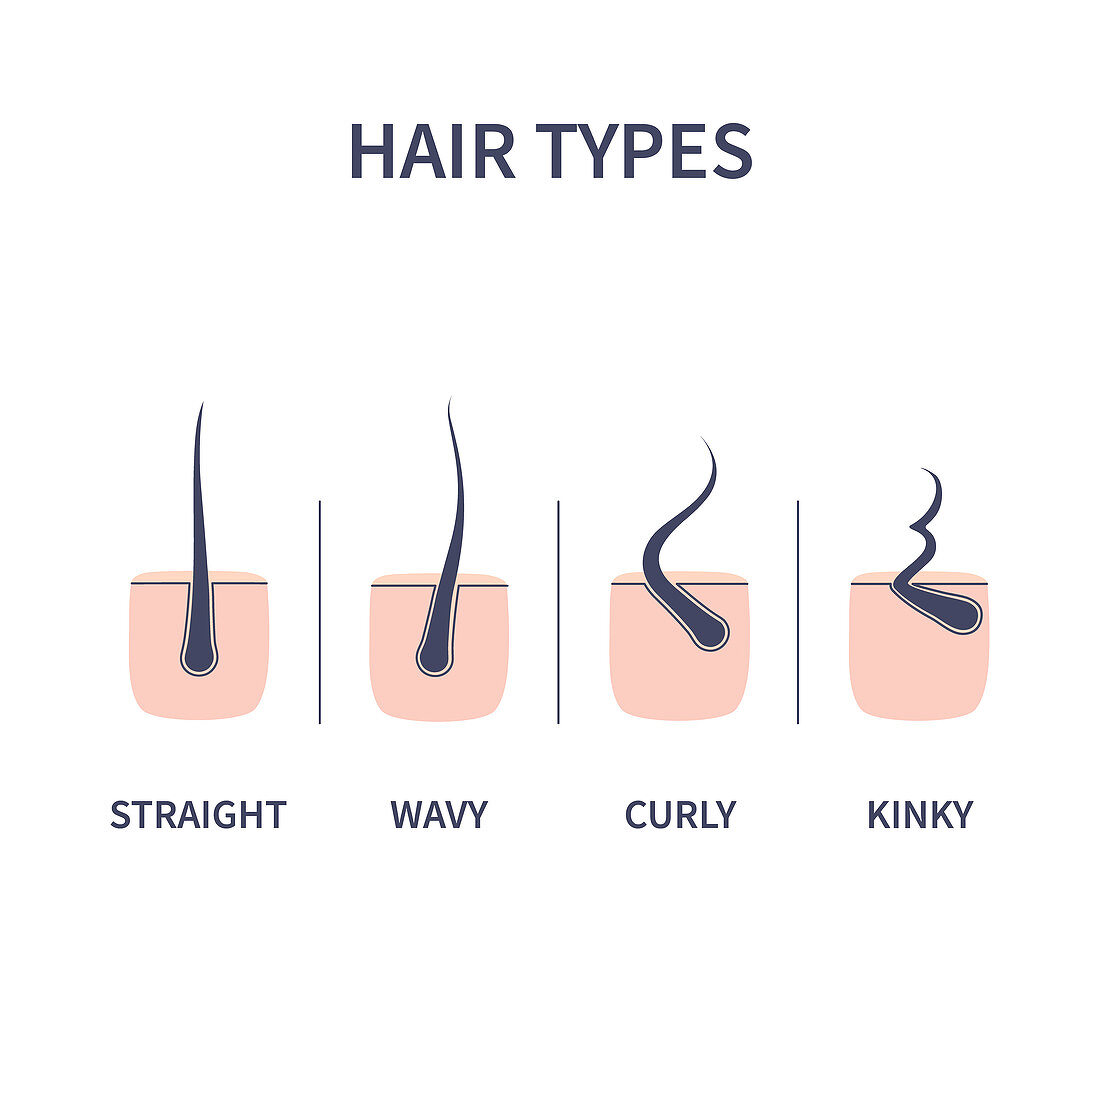 Hair types, illustration